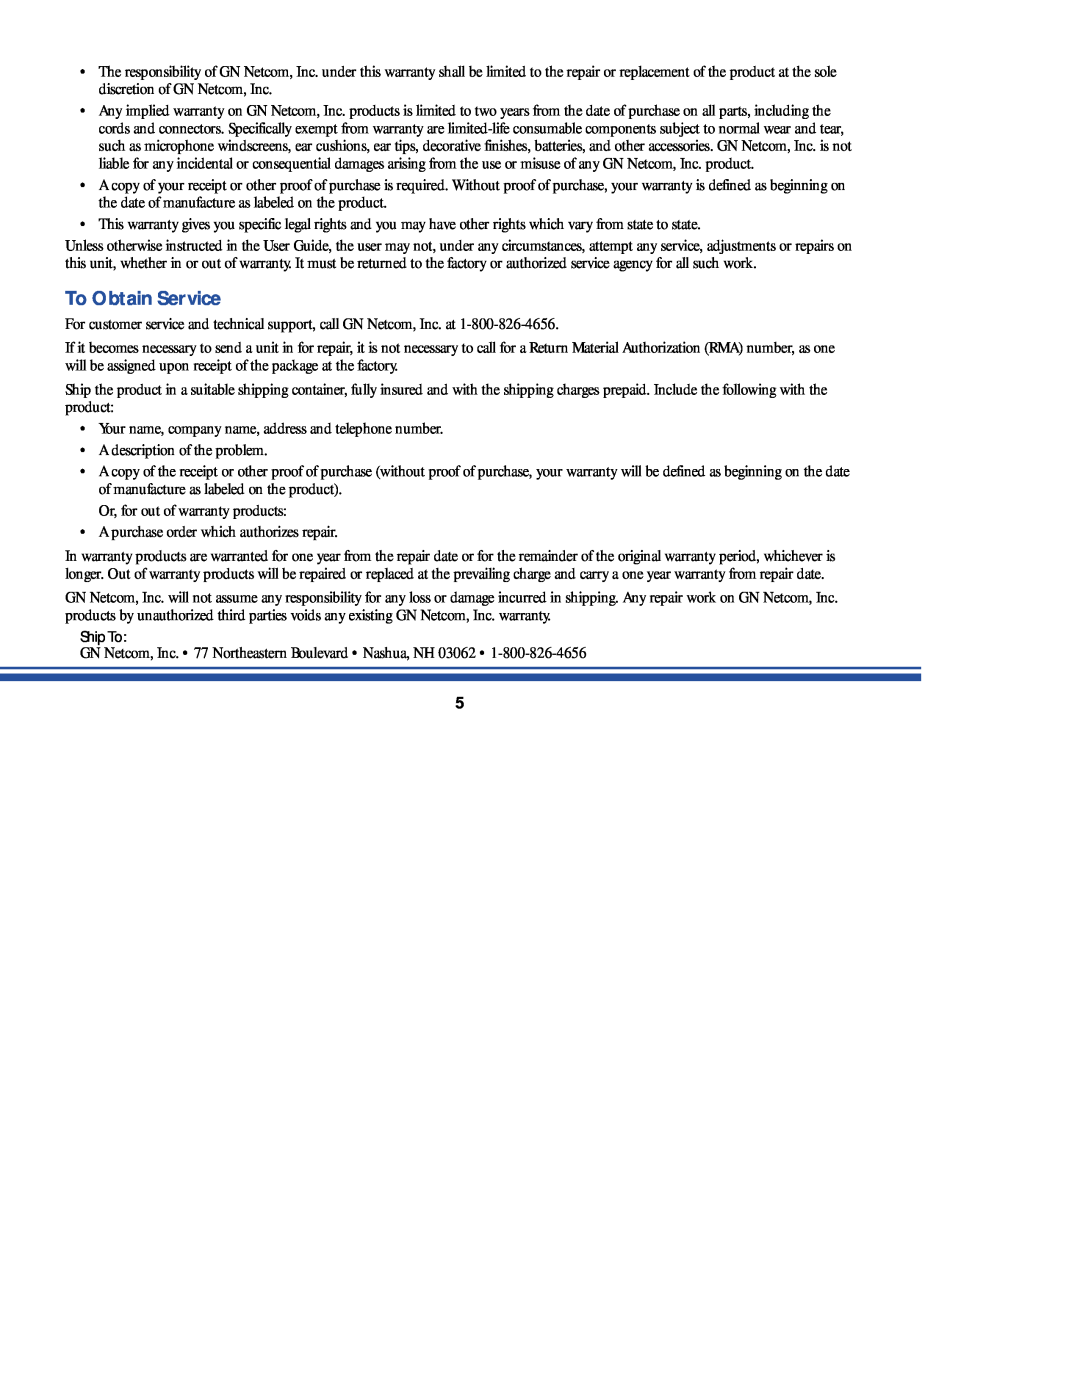 GN Netcom OG-II manual To Obtain Service 